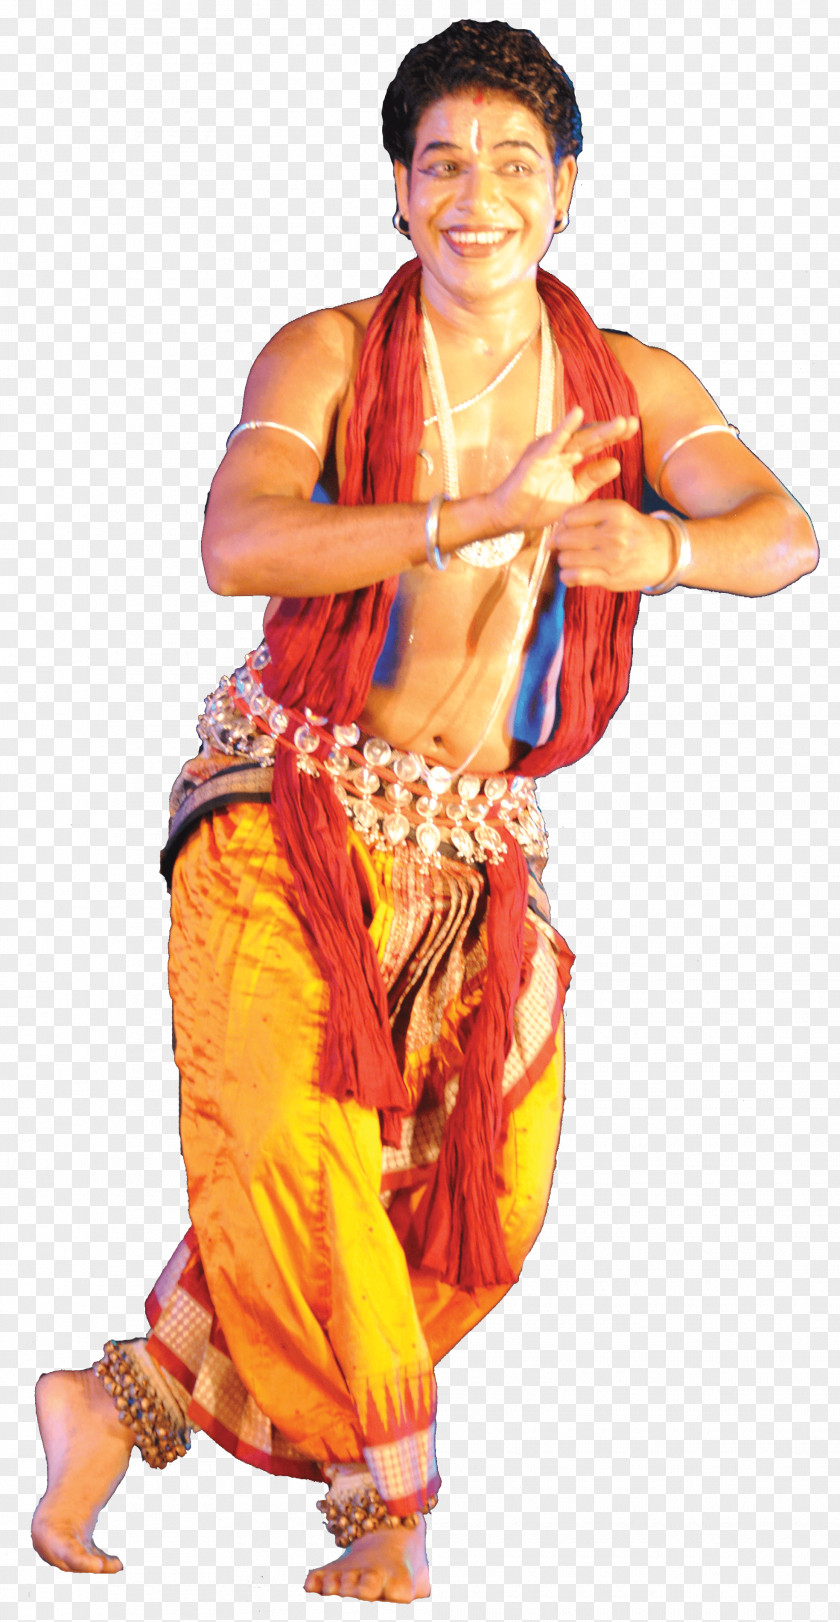 Indian Dance Abdomen Sari Shoulder PNG